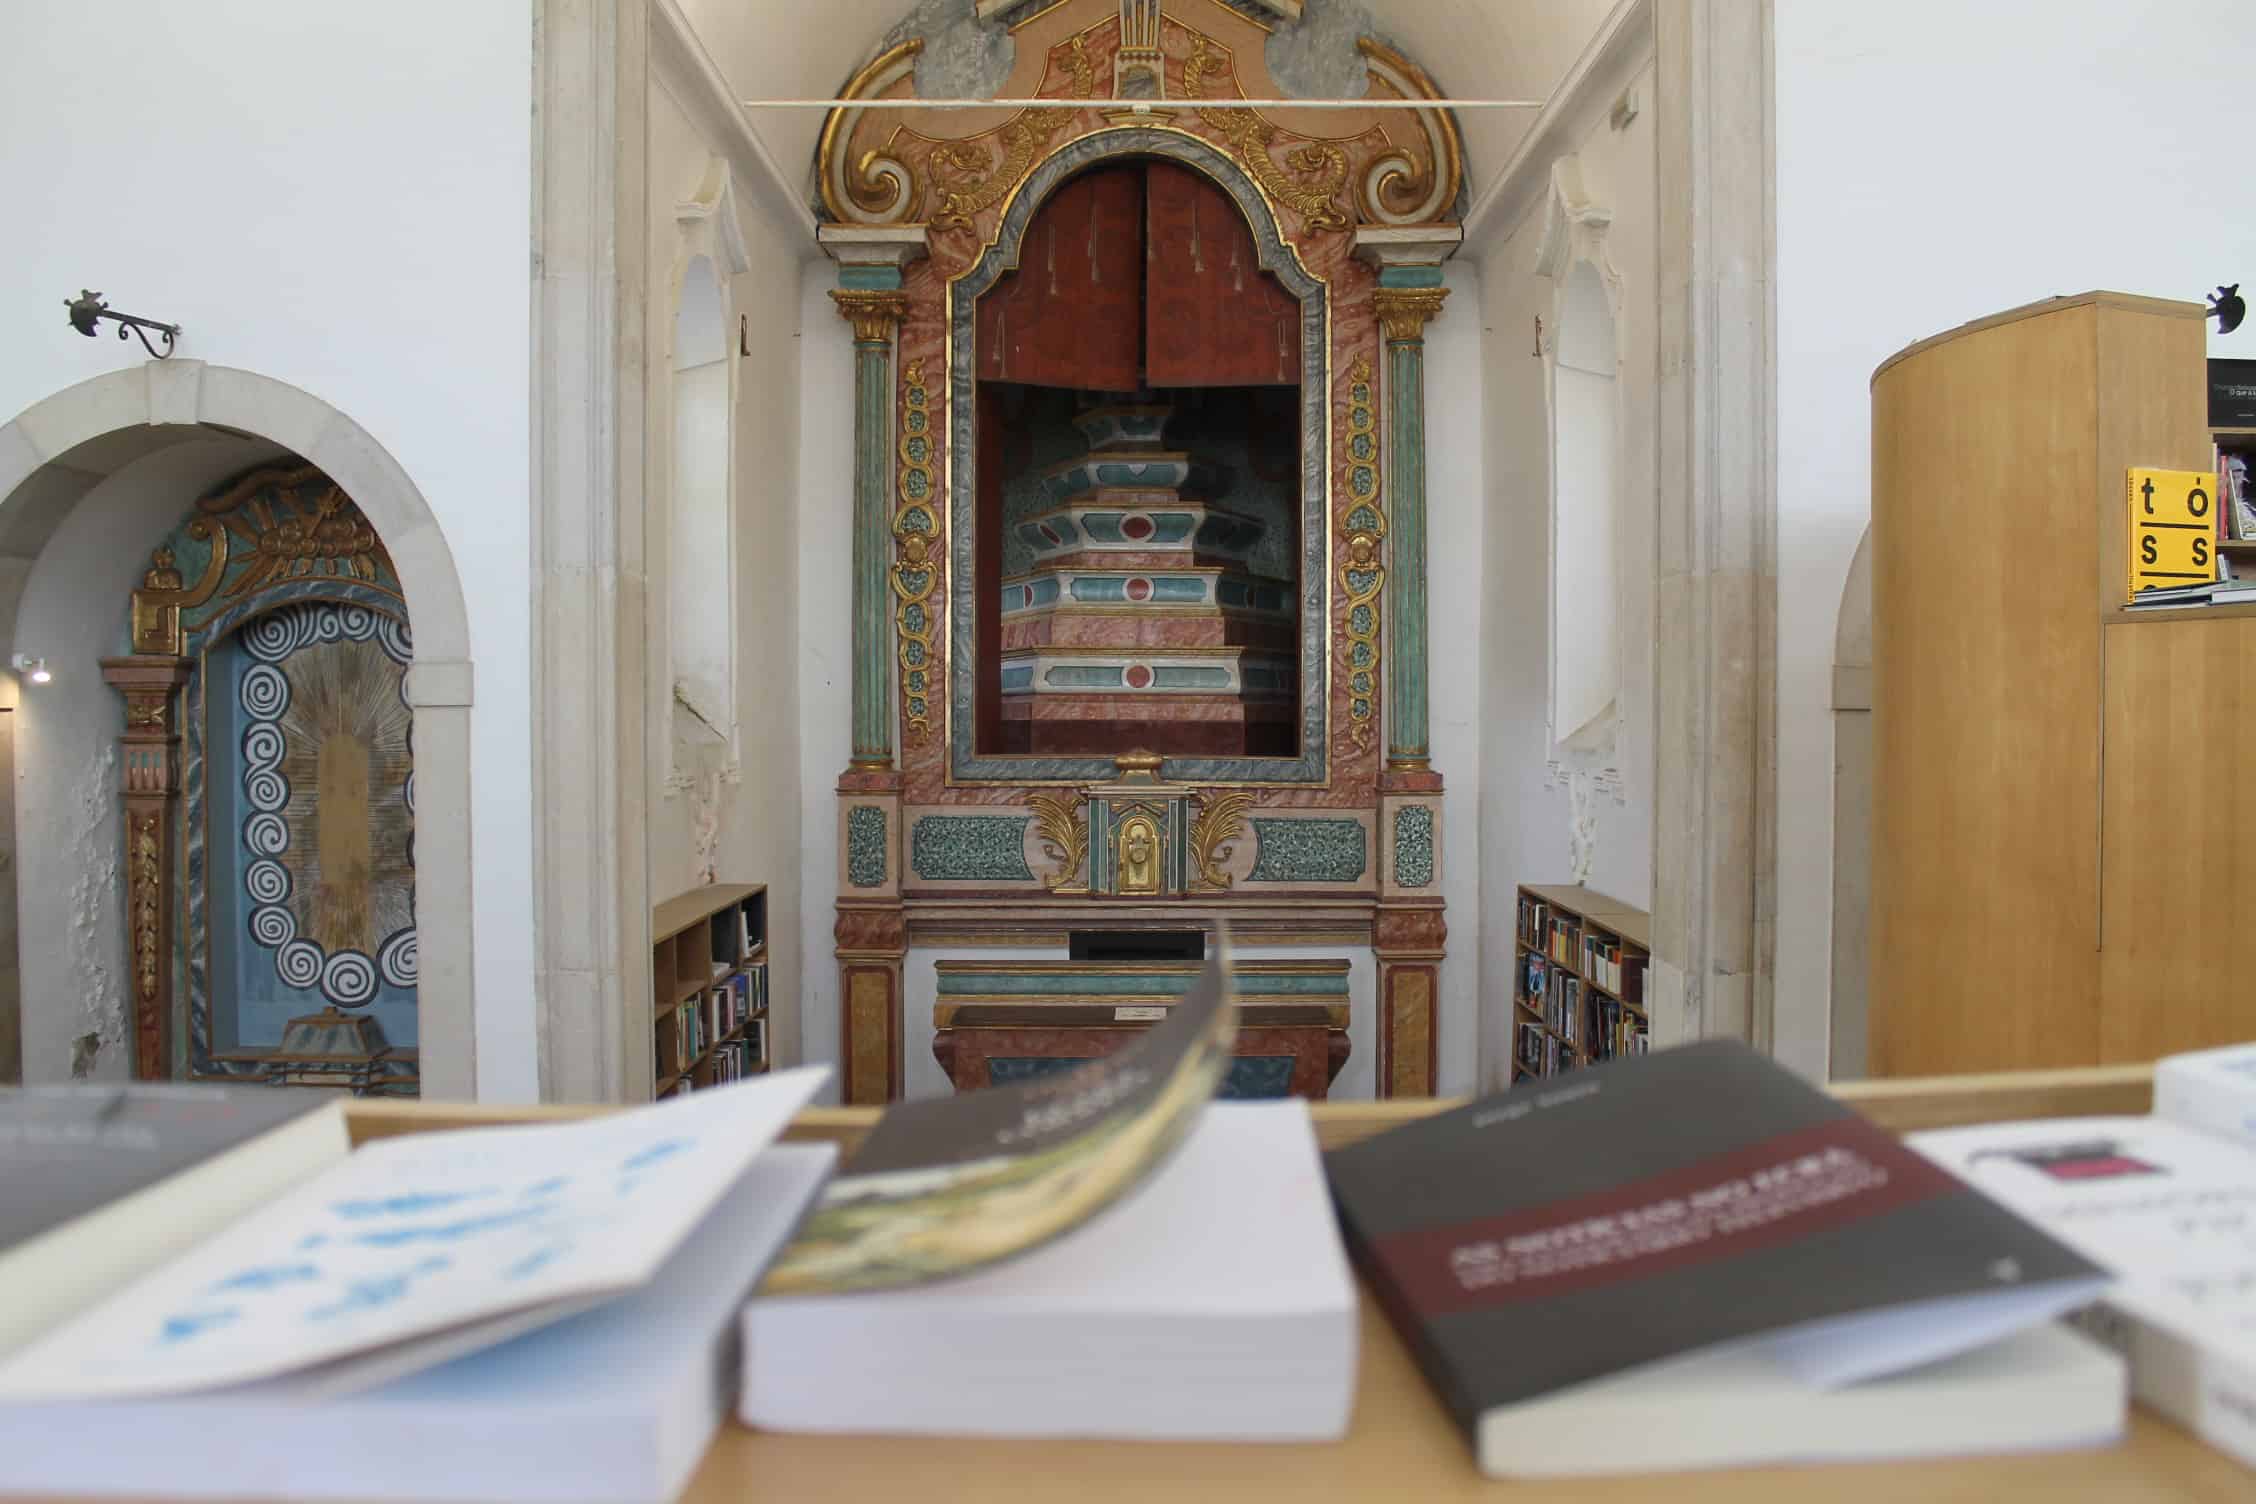 Igreja de São Tiago Church in Óbidos, Portugal, a bookstore and popular tourist attraction